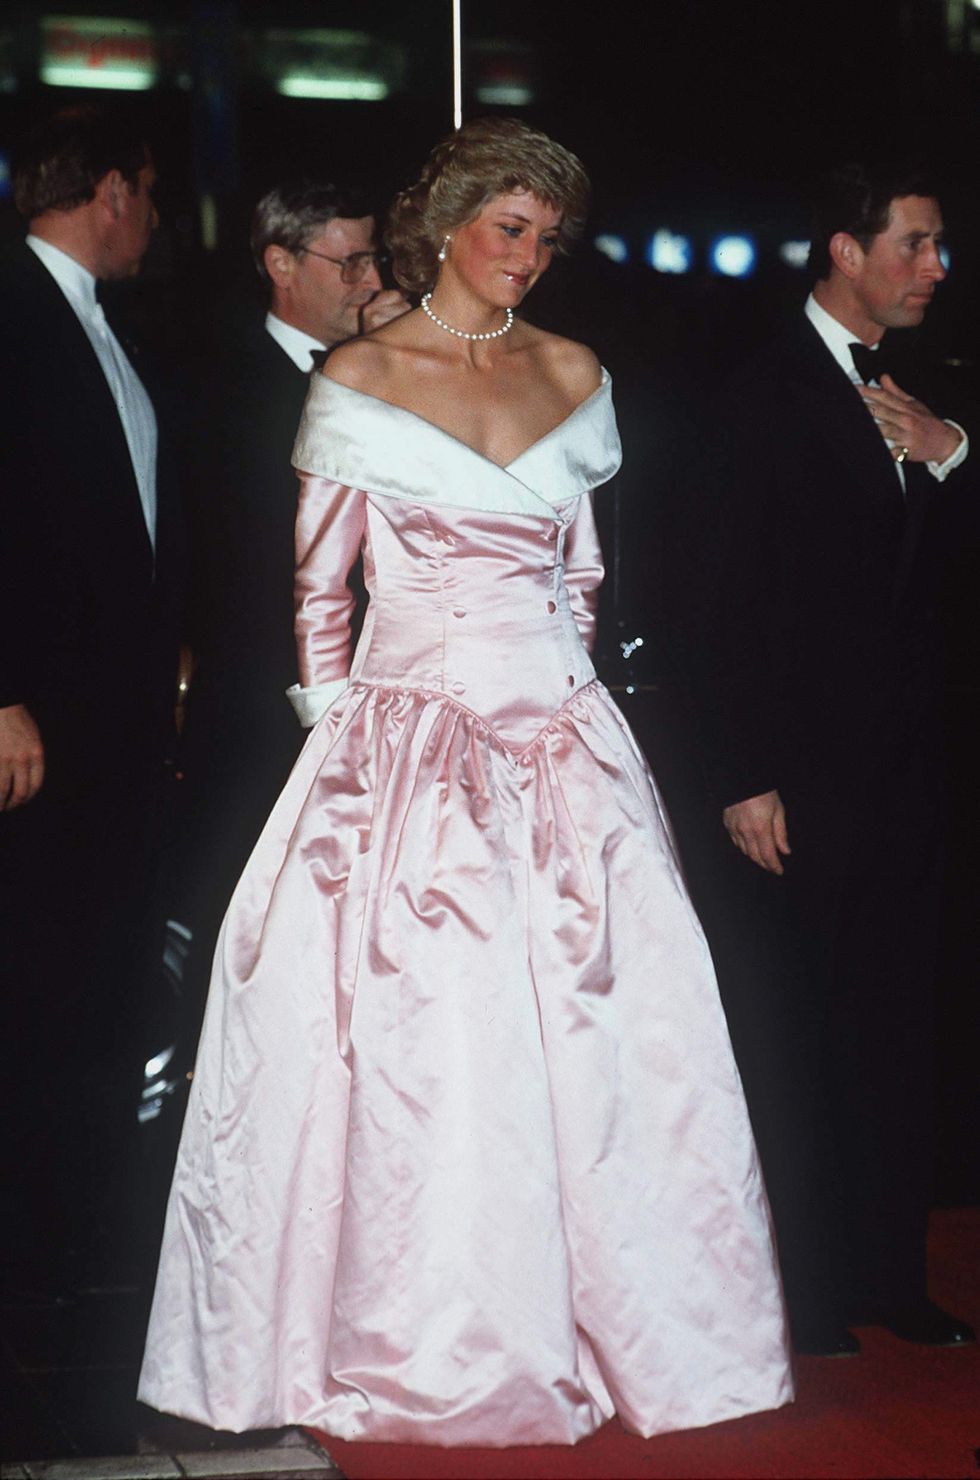 Princess of Diana wearing an off-the-shoulder dress